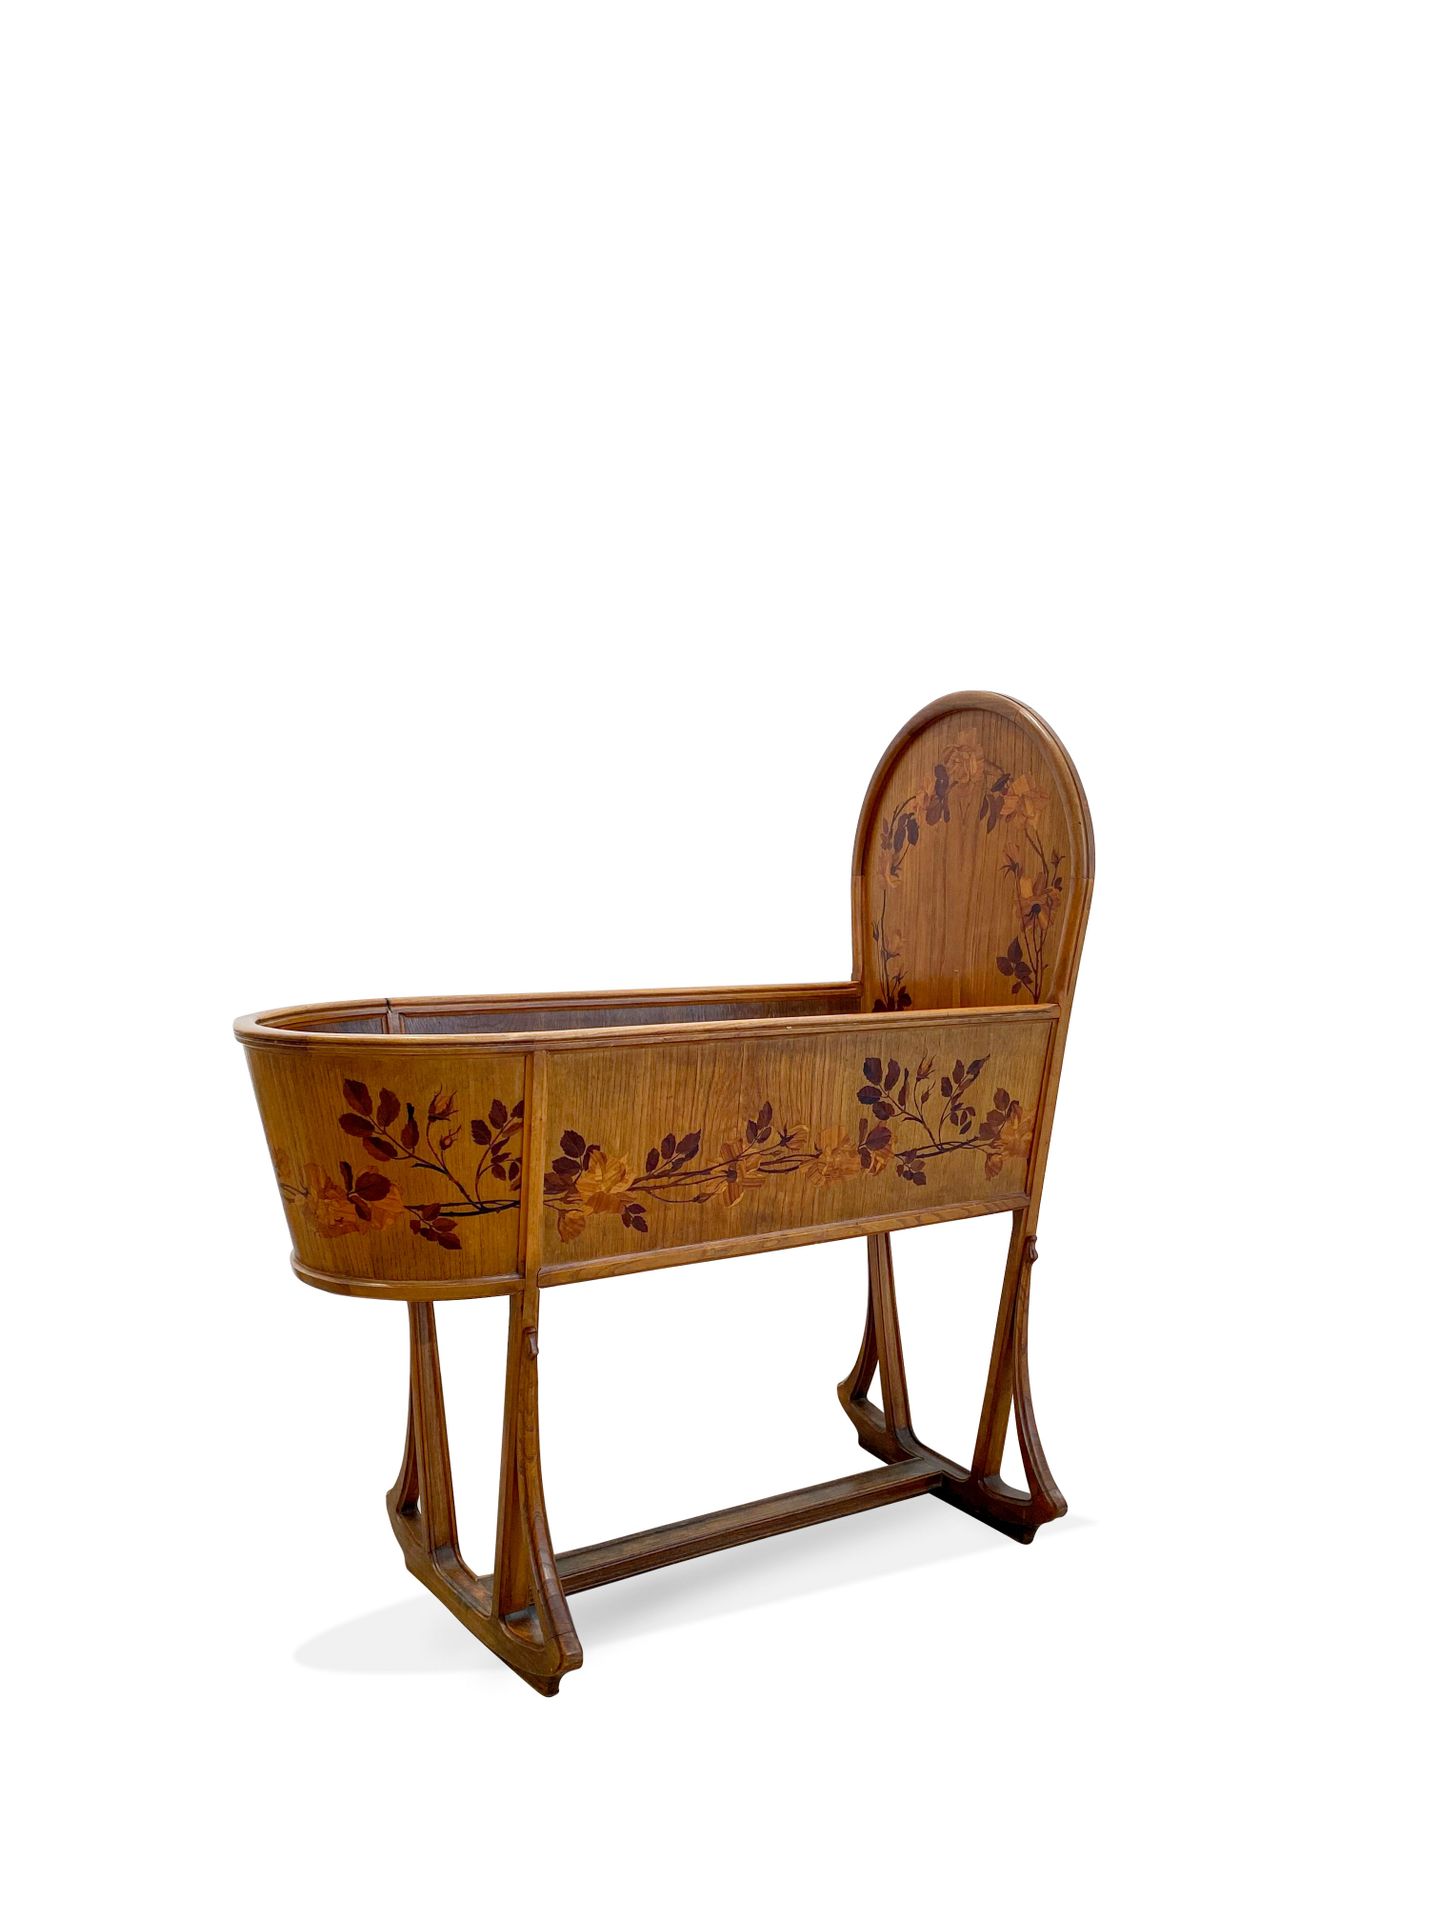 TRAVAIL FRANÇAIS 法国作品 摇篮 木质镶嵌花纹装饰 131 x 55 x 110厘米。约1900年